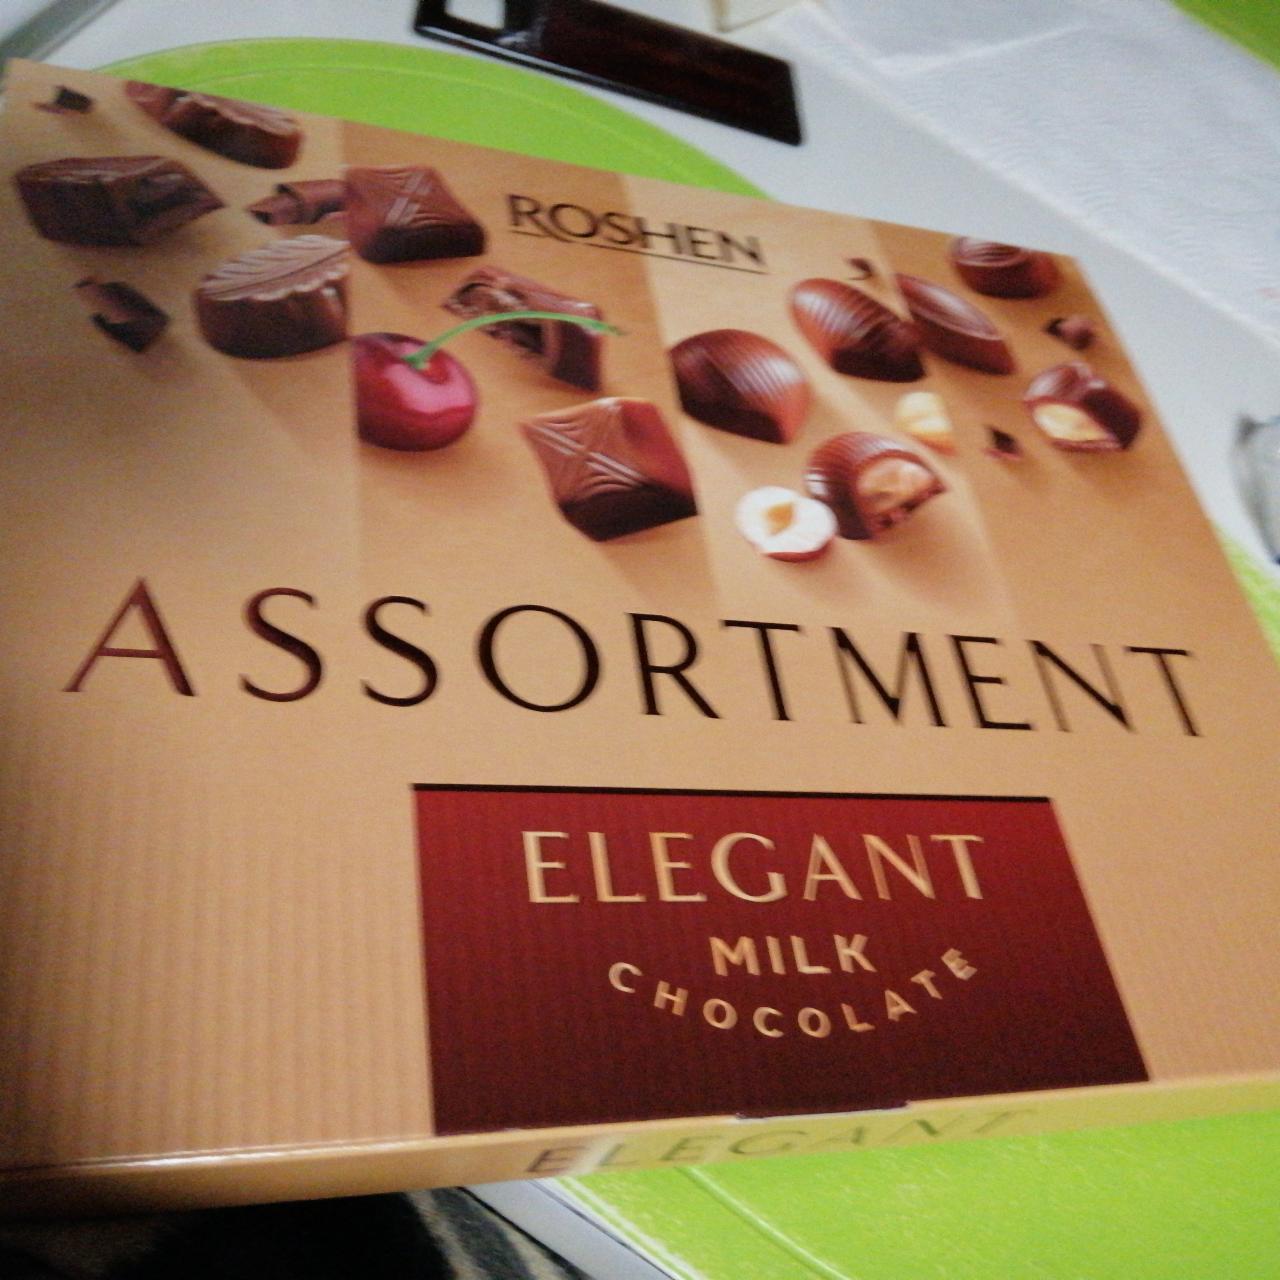 Fotografie - Assortment Elegant Milk Chocolate Roshen